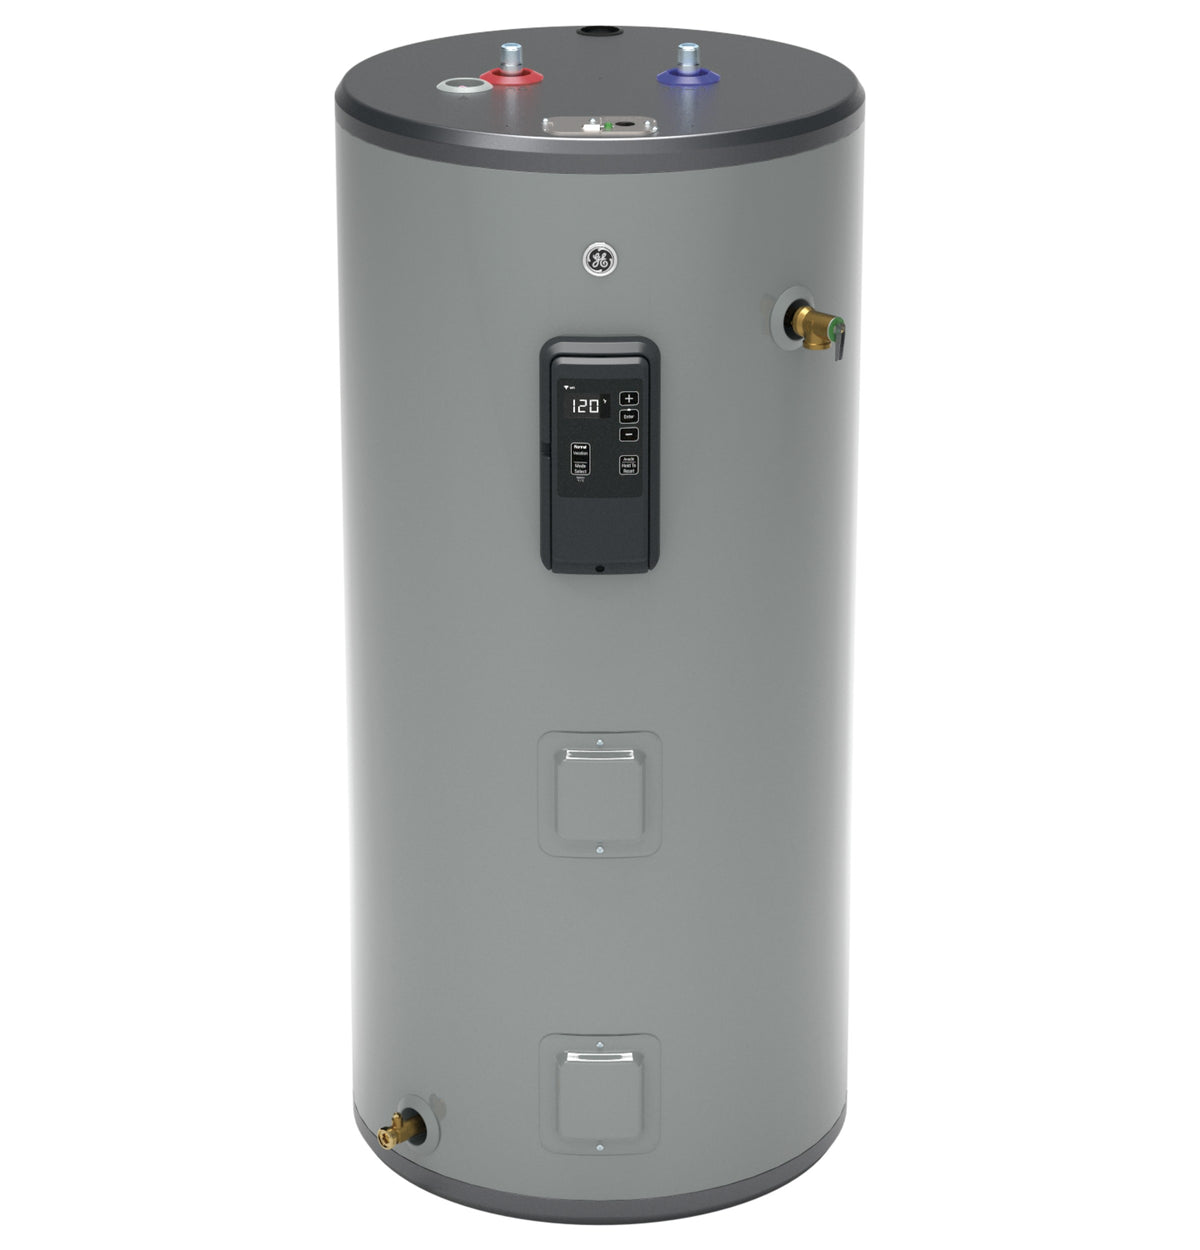 https://www.geaprusa.shop/wp-content/uploads/1693/73/we-have-an-incredible-range-of-ge-smart-50-gallon-short-electric-water-heater-ge-appliances-pr-online-store_0.jpg